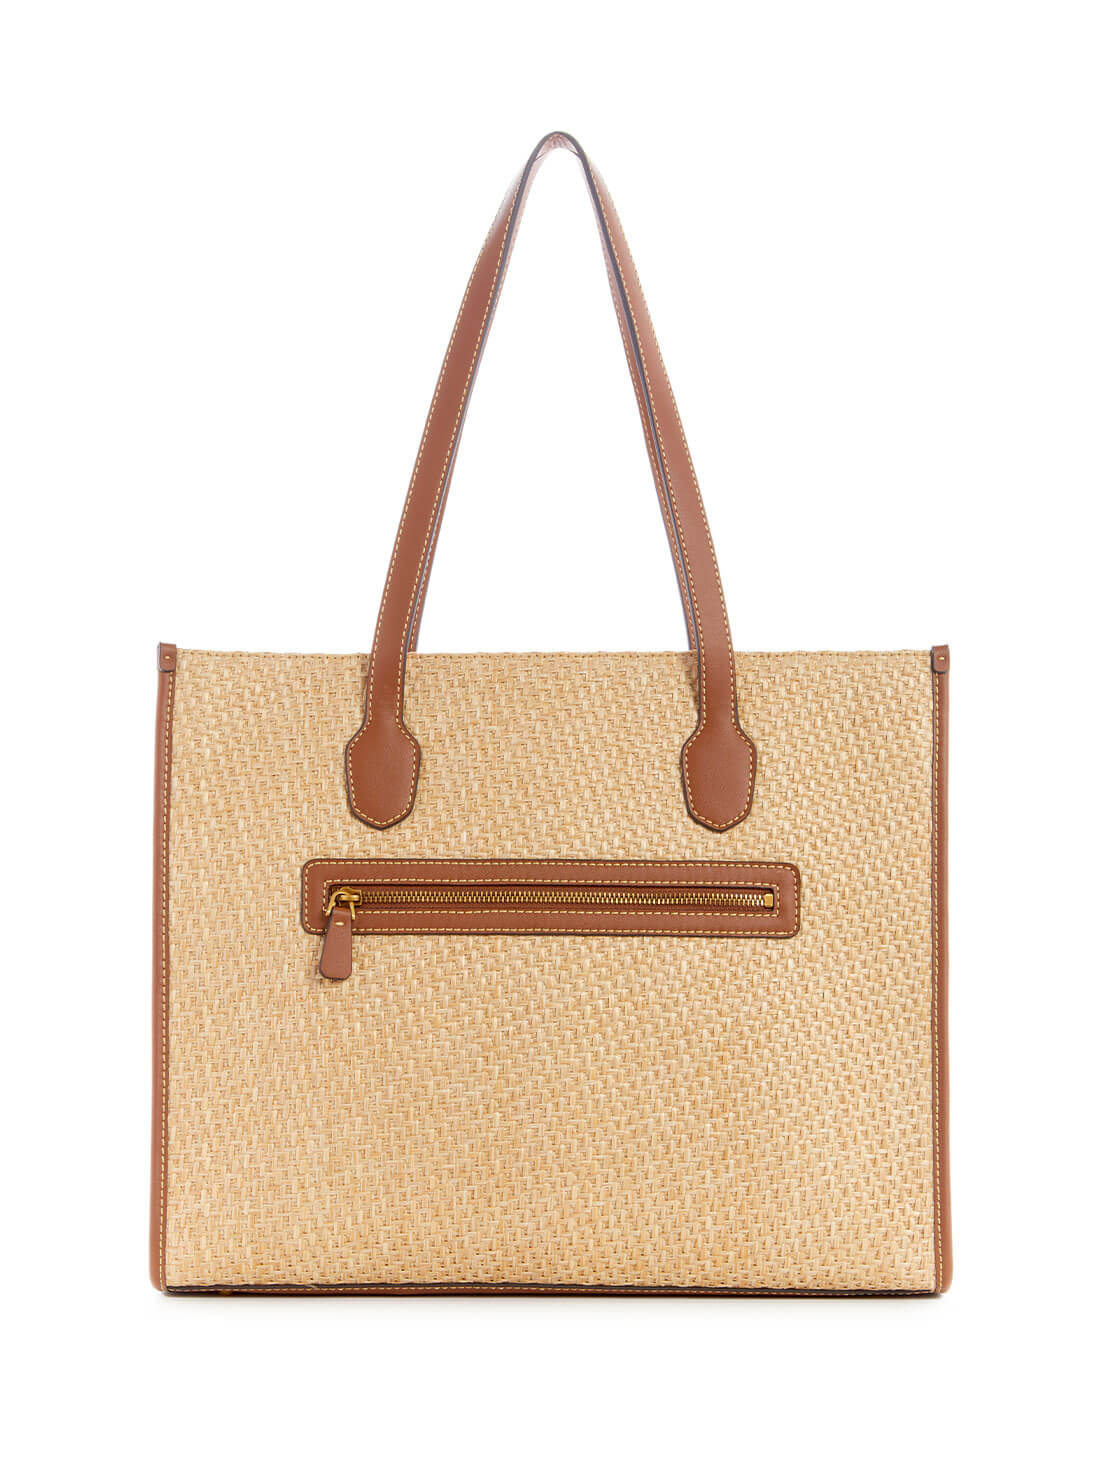 Cognac Brown and Natural Silvana Tote Bag | GUESS Women's Handbags | back view